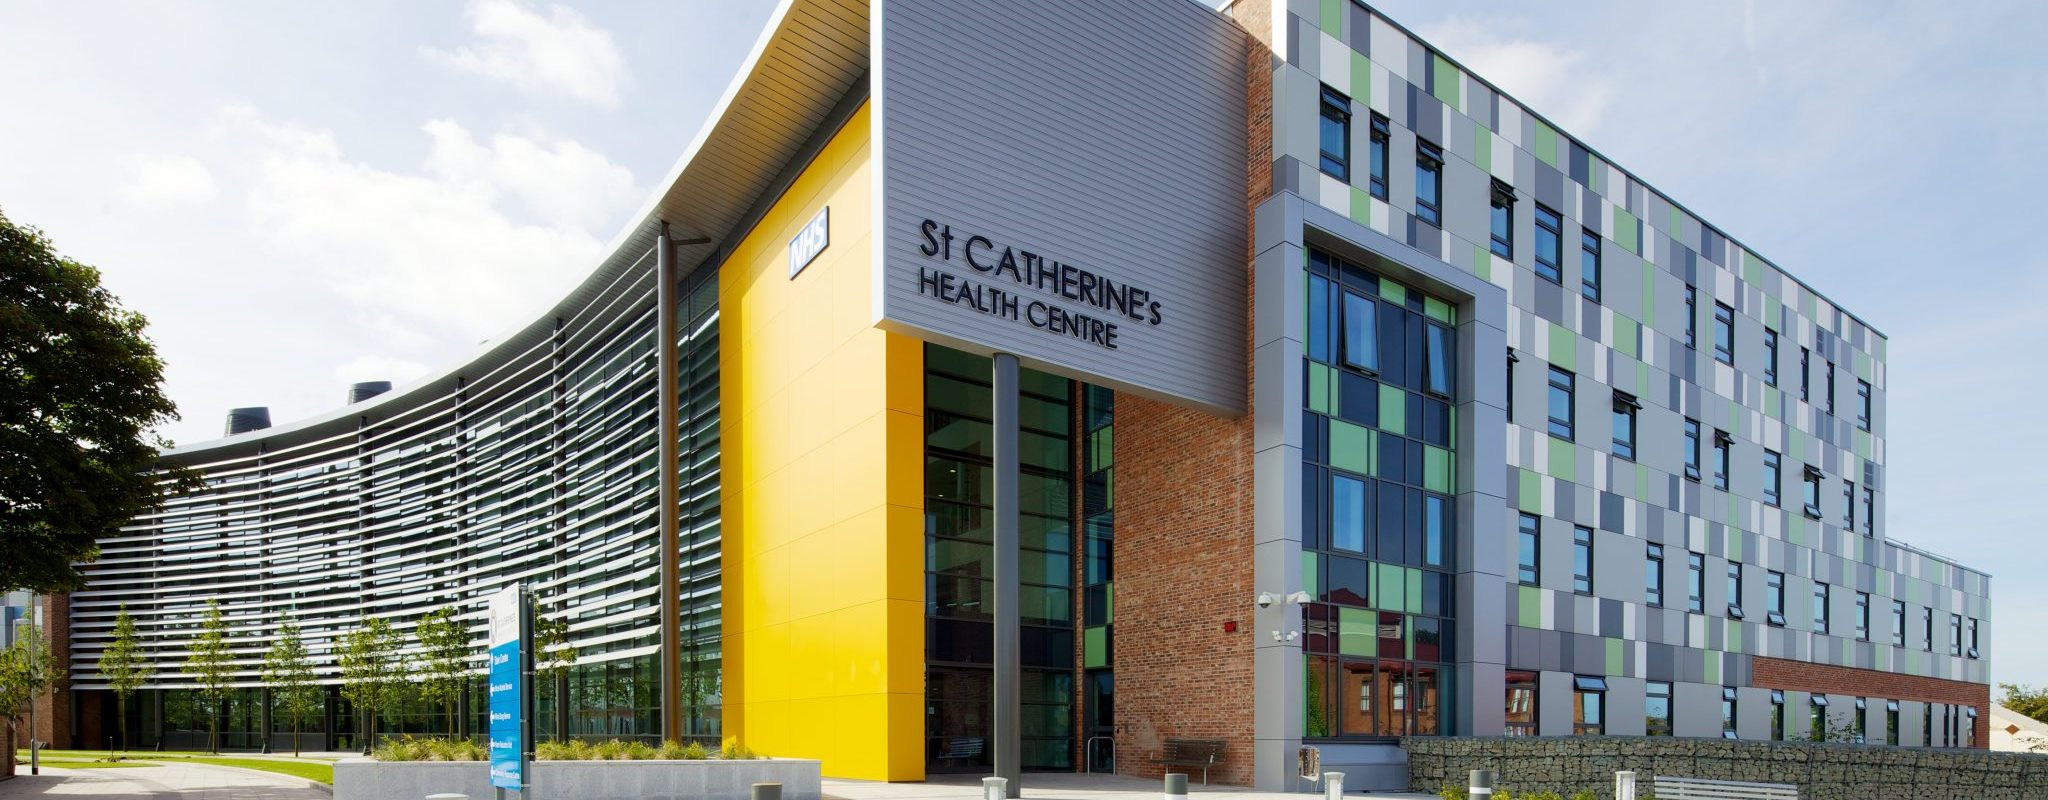 St Catherine’s Health Centre